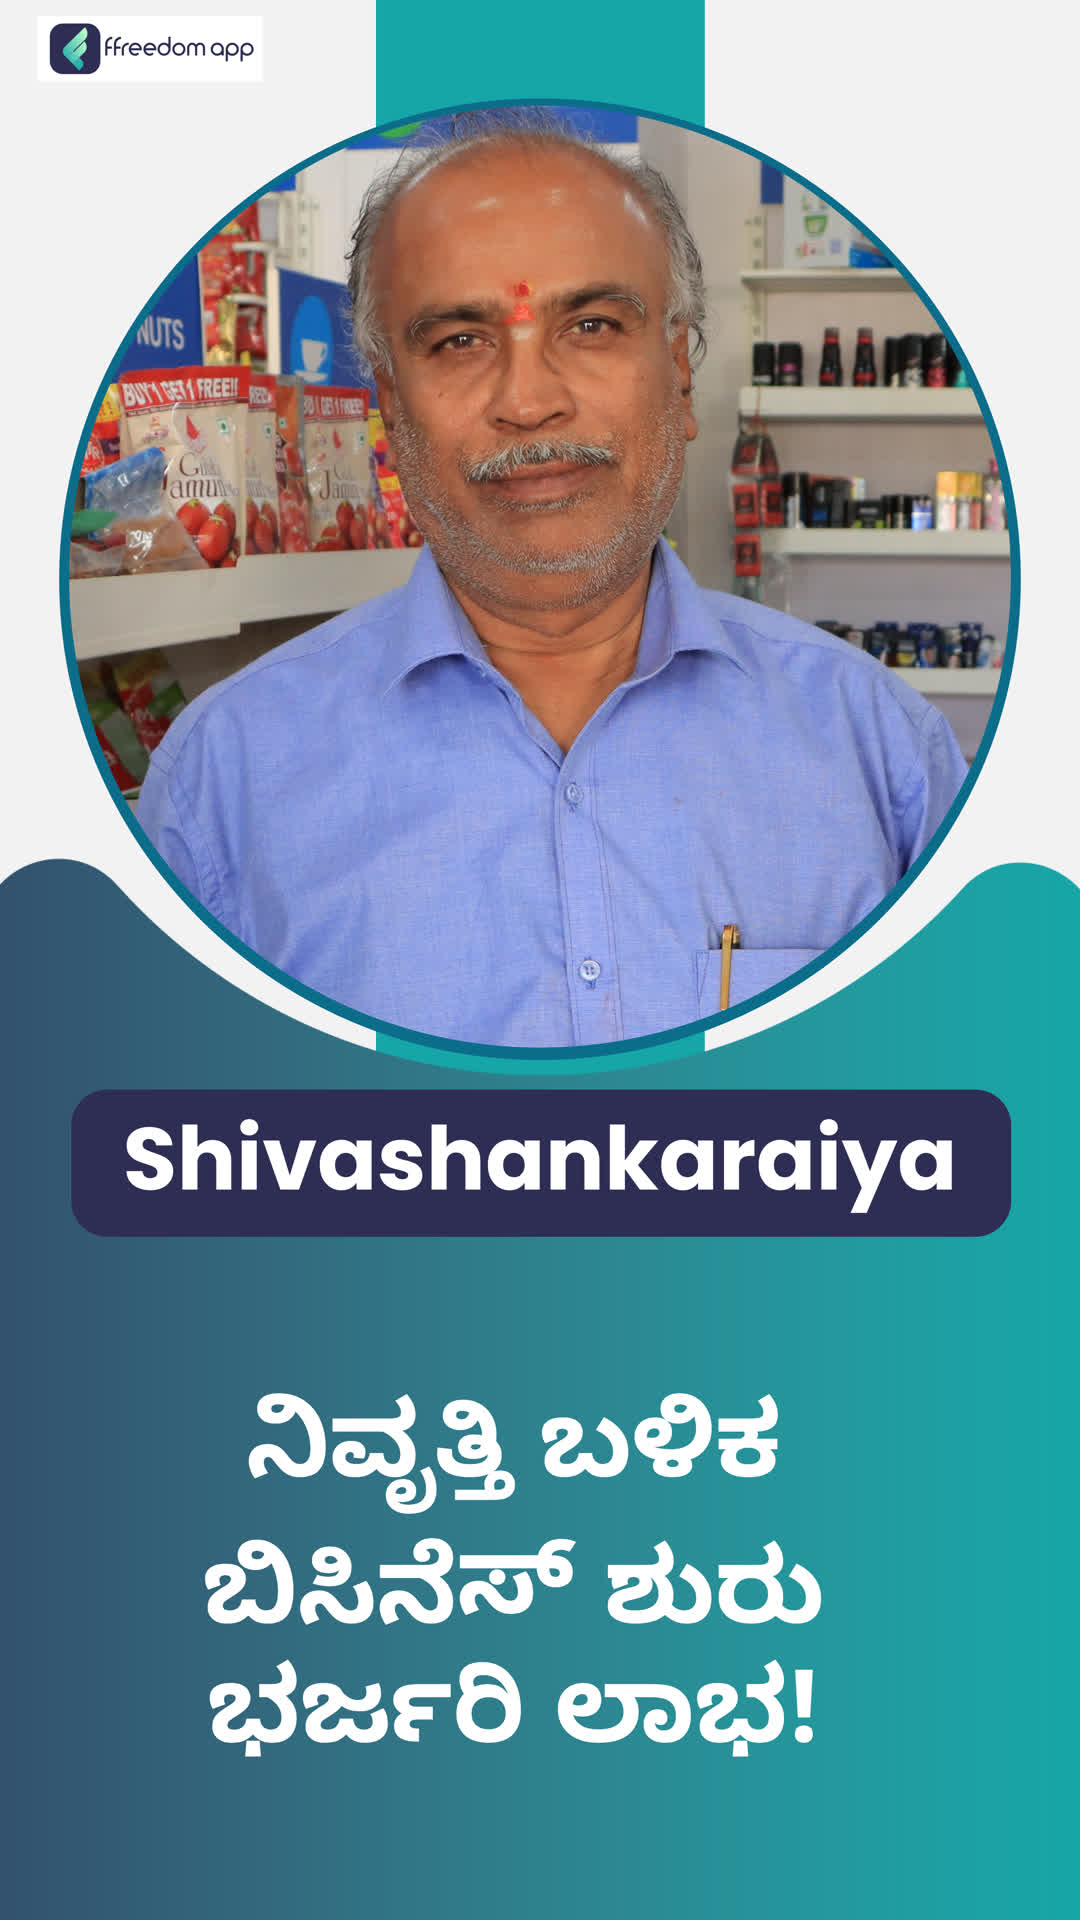 shivaya's Honest Review of ffreedom app - East Godavari ,Andhra Pradesh